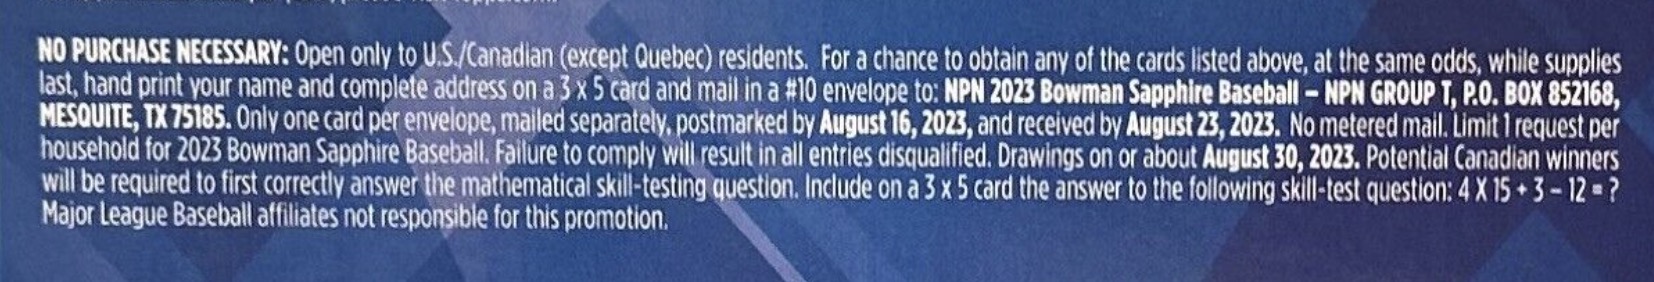 2023 Bowman Sapphire Edition Baseball Cards - Hobby Box - No Purchase Necessary (NPN) Information